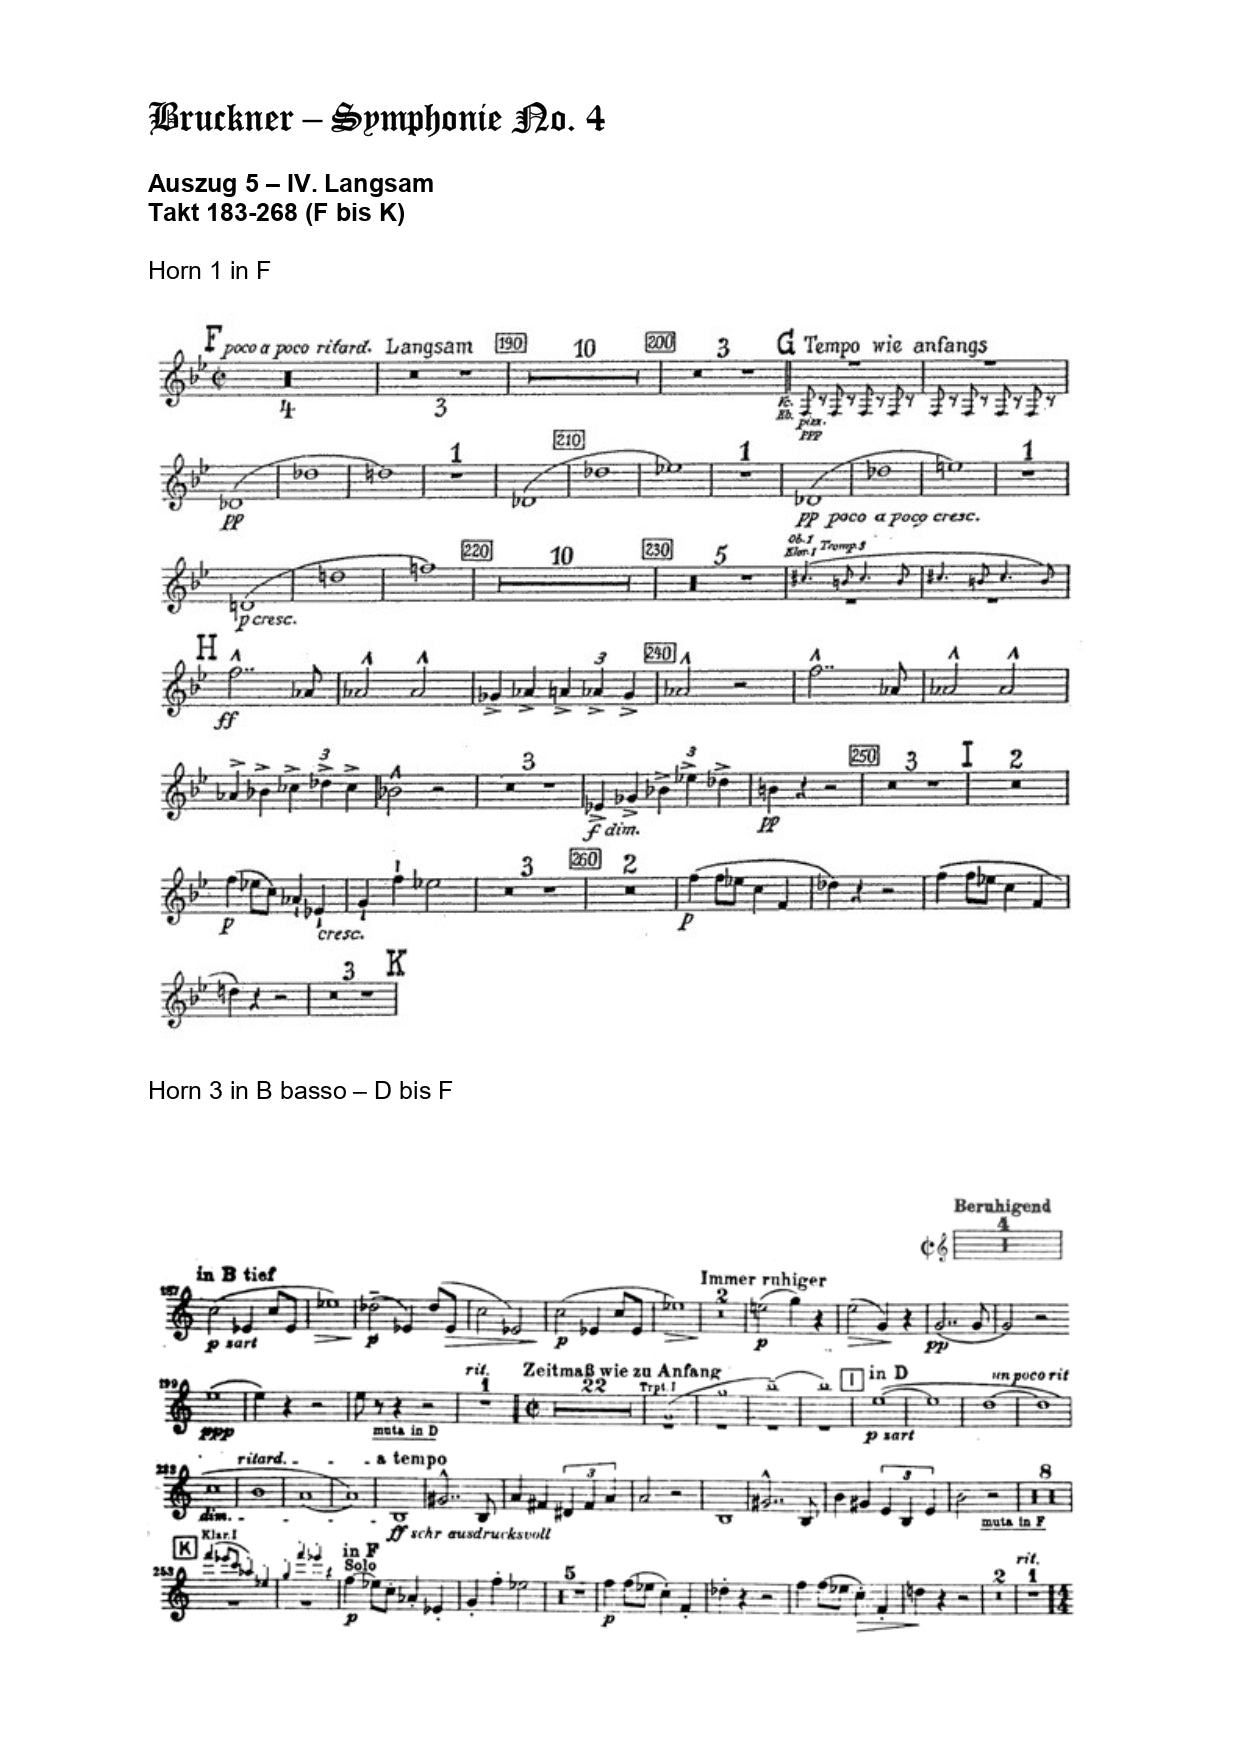 Orchester Studie - Anton Bruckner - Symphonie No. 4 - Horn 1,2,3,4